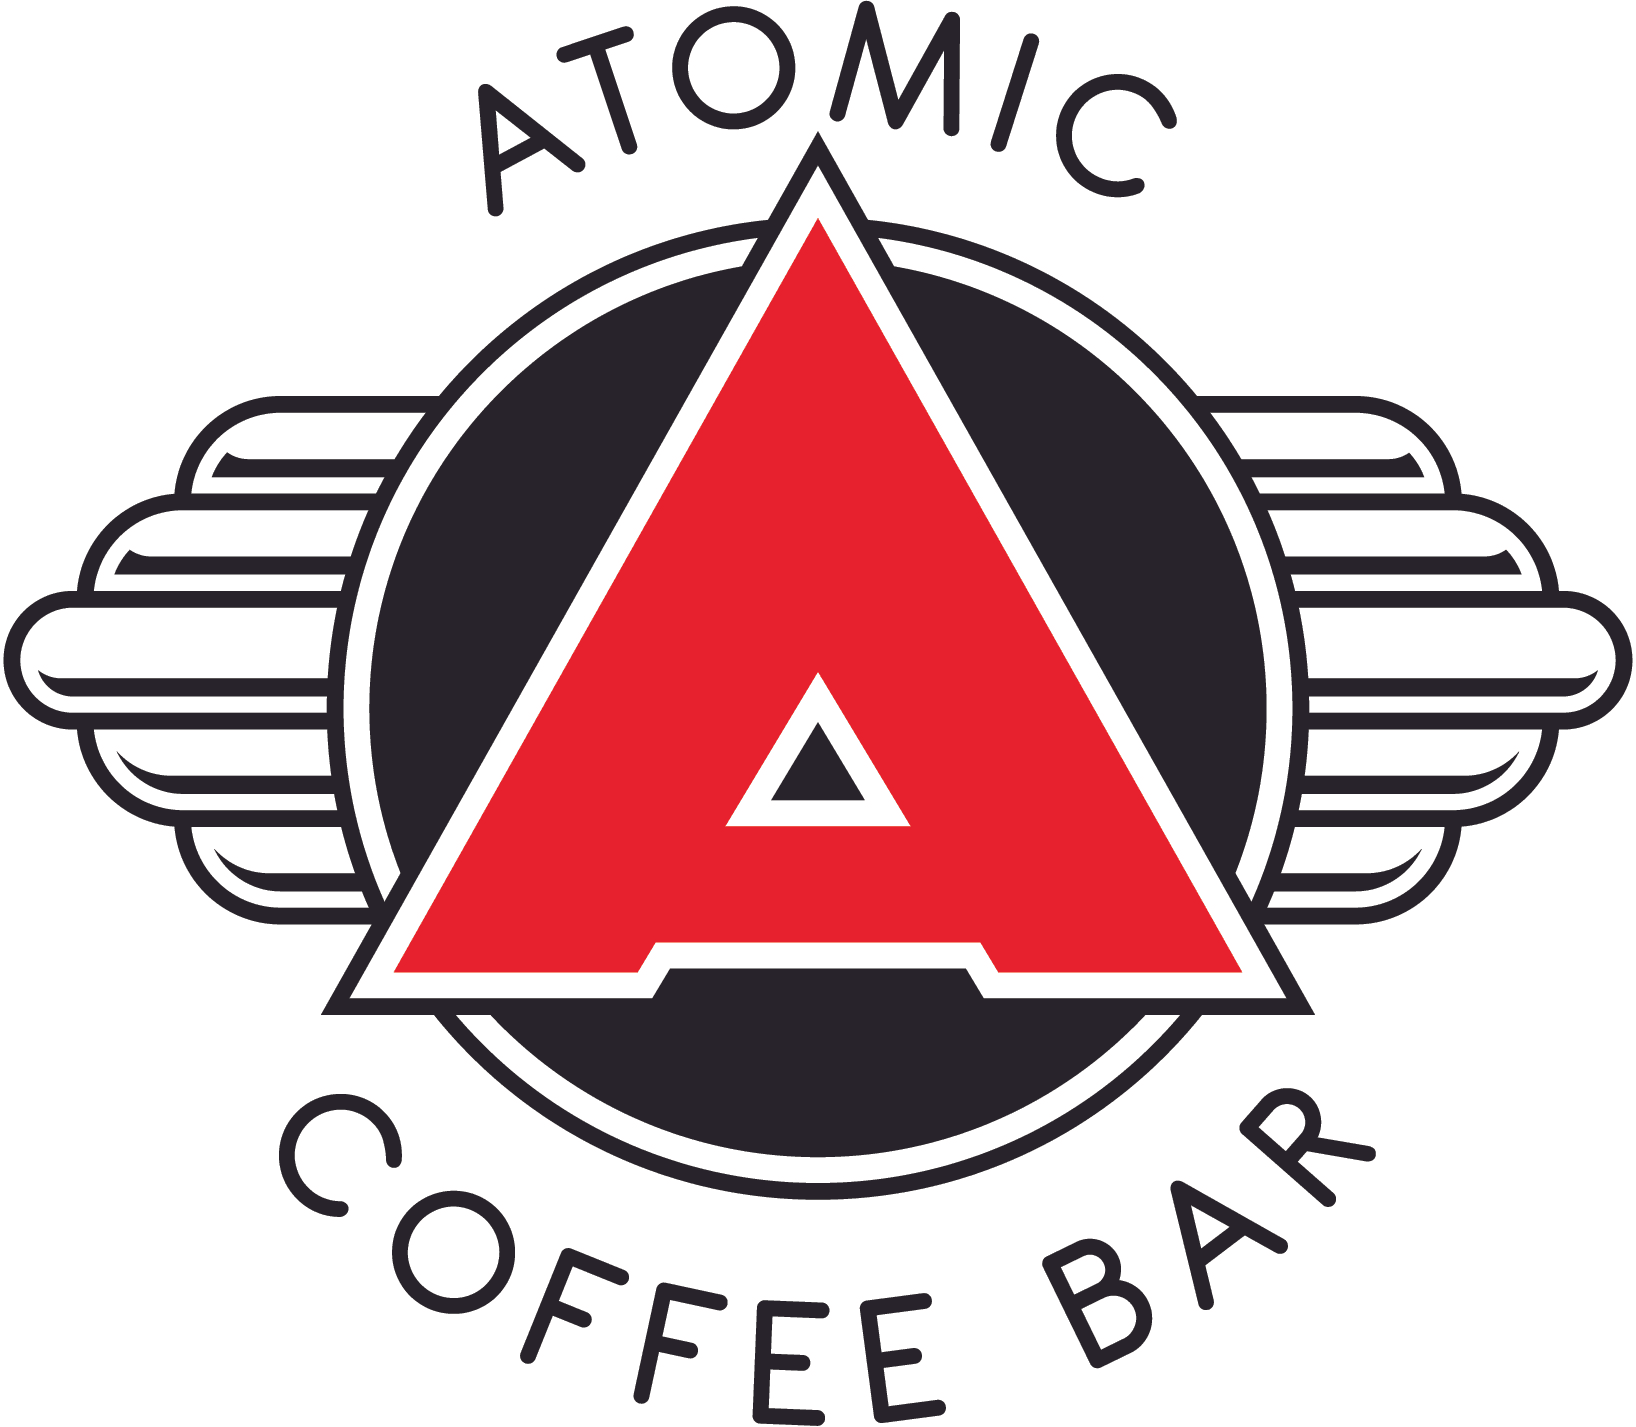 AtomicCoffeeBro